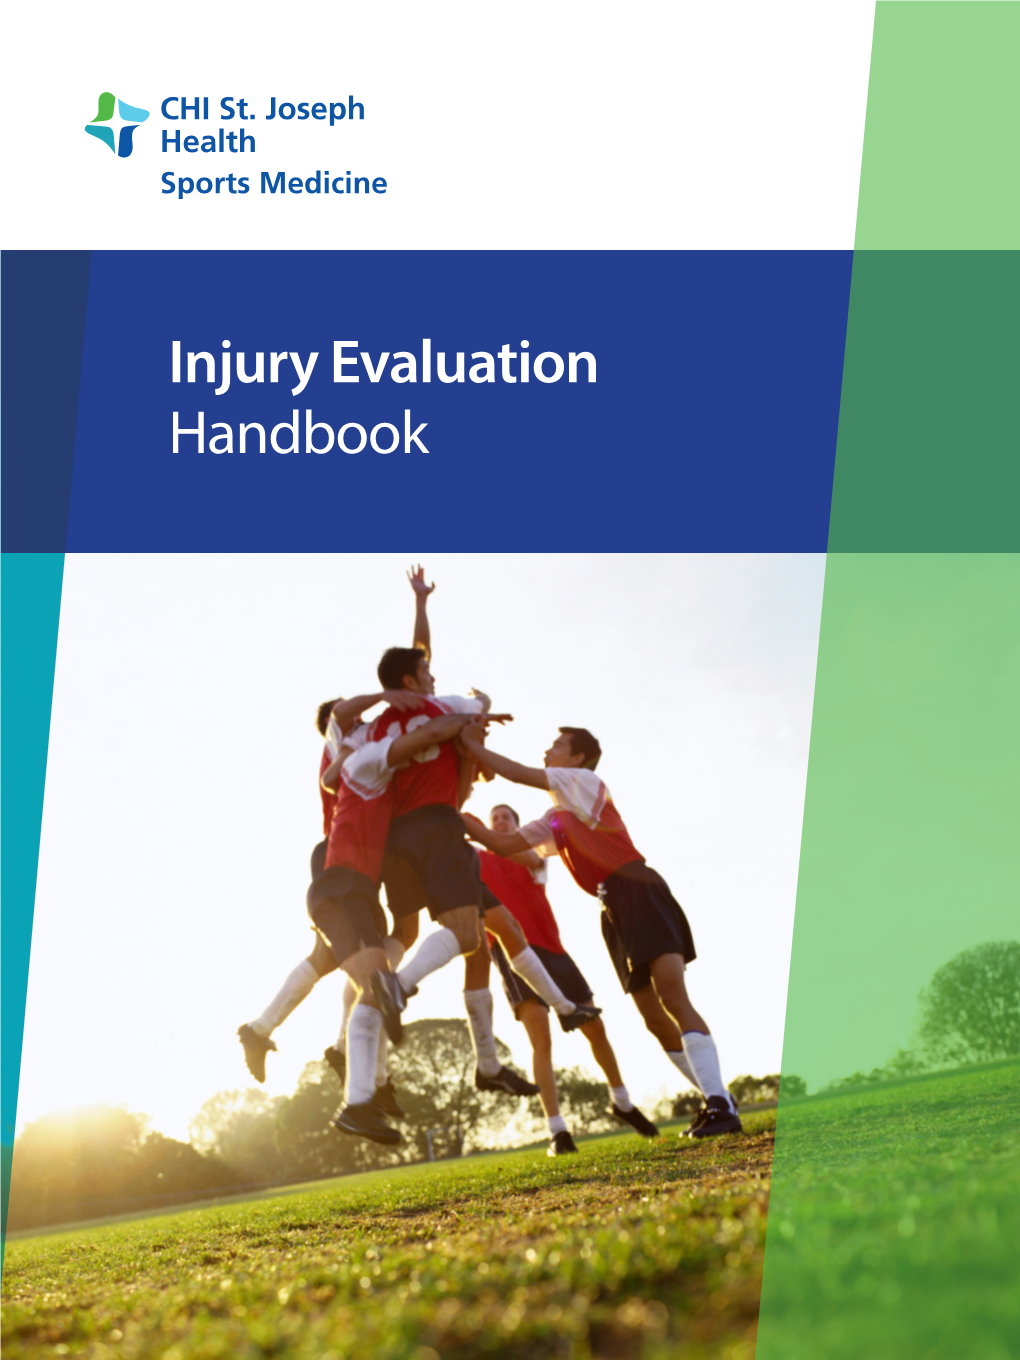 Injury Evaluation Handbook Introduction 2